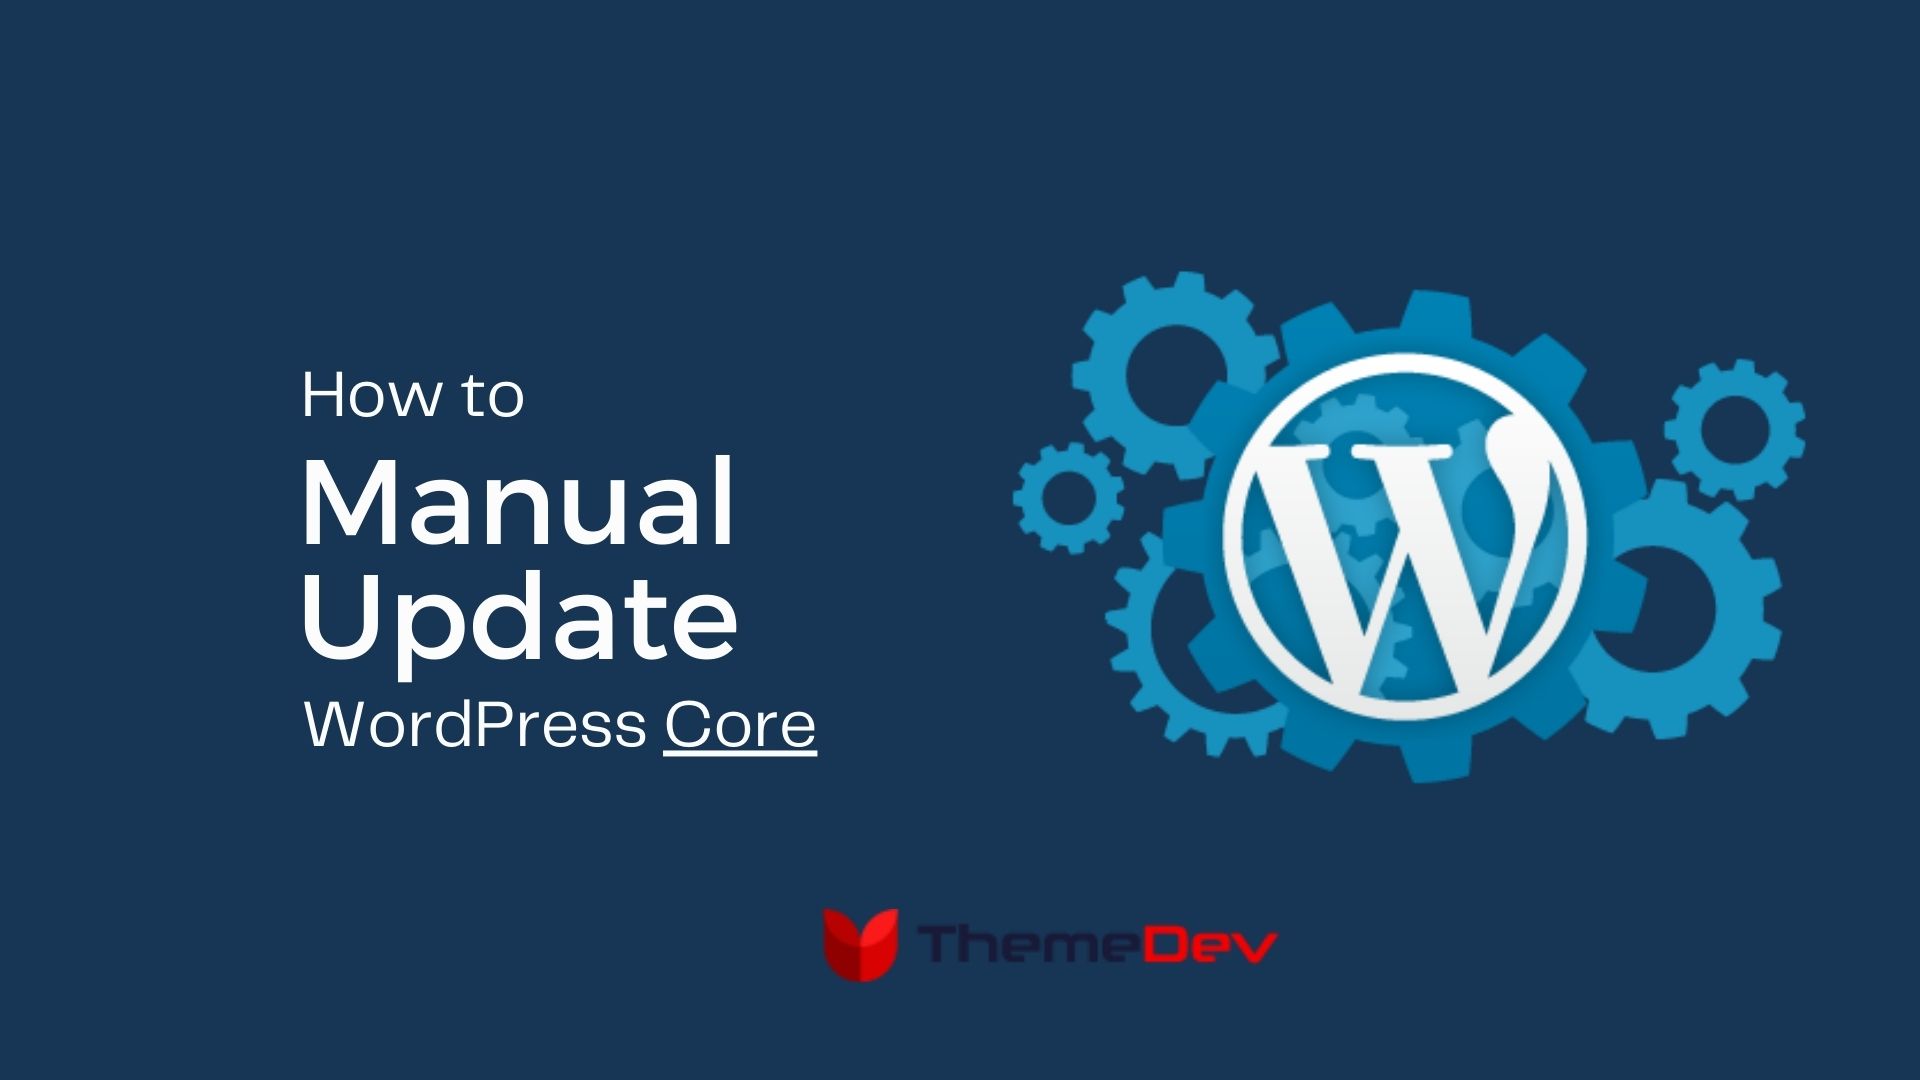 How to Manual Update WordPress Core